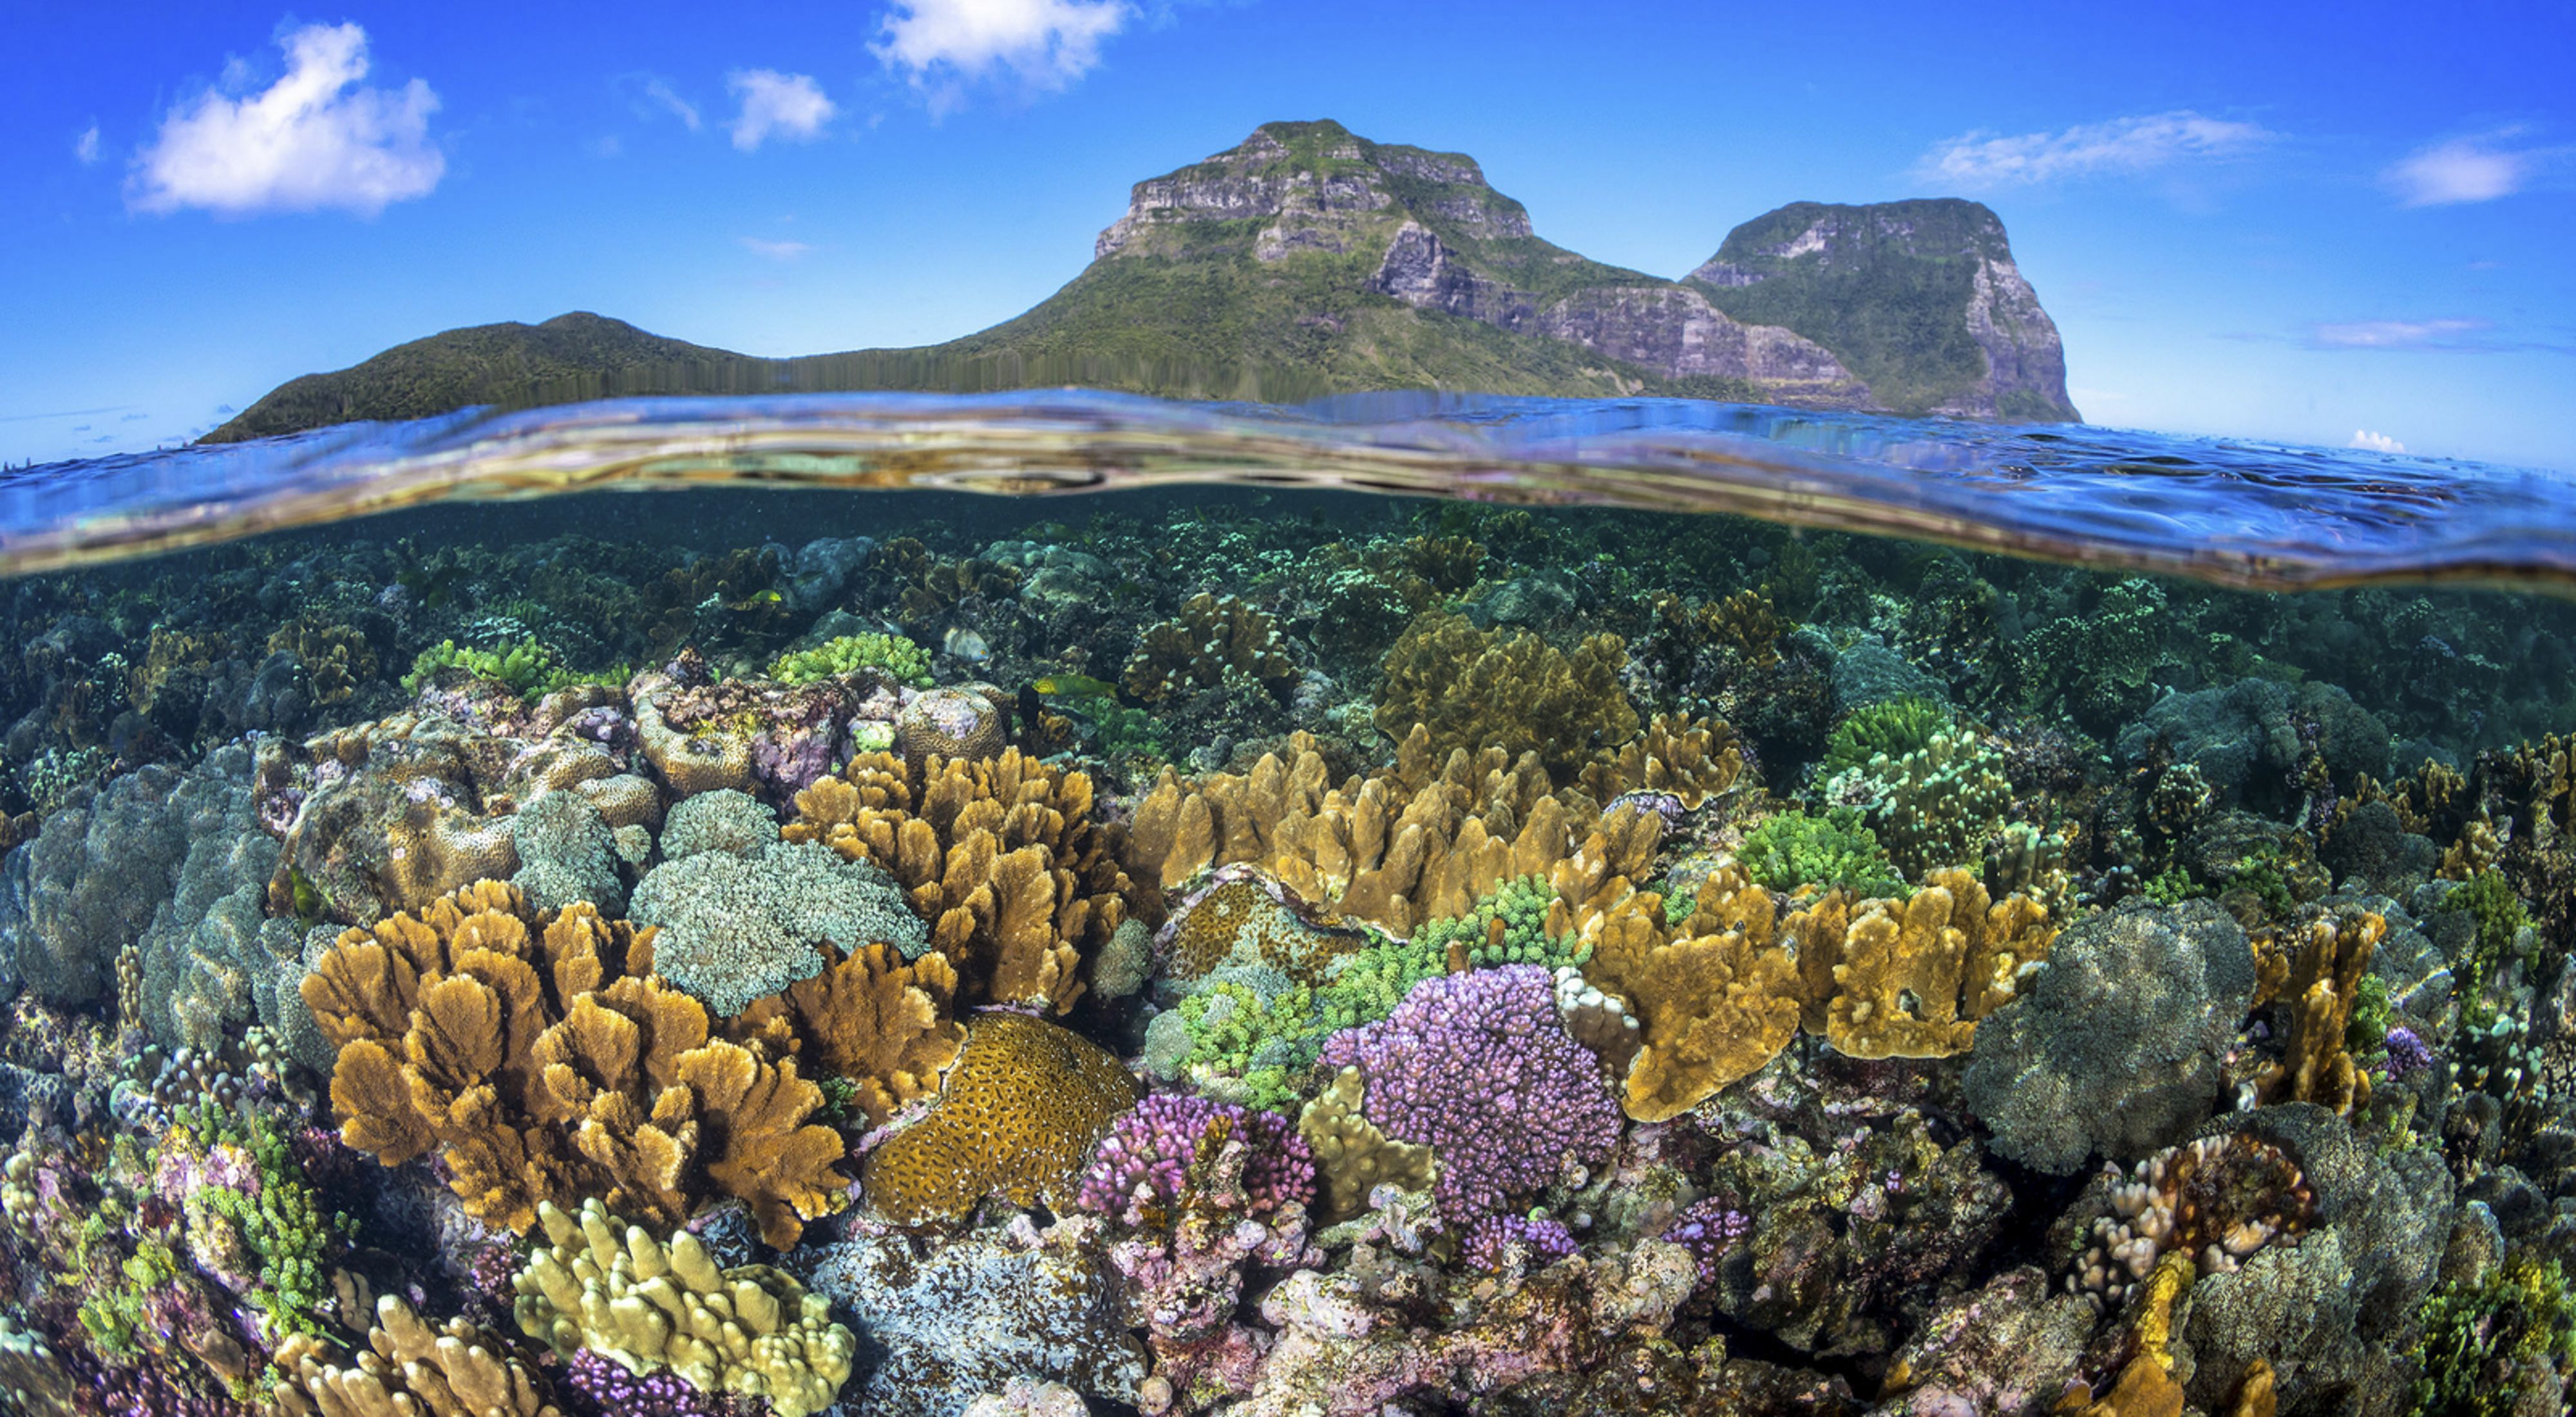 Designing Hybrid Reefs for Coastal Protection & Coral Restoration